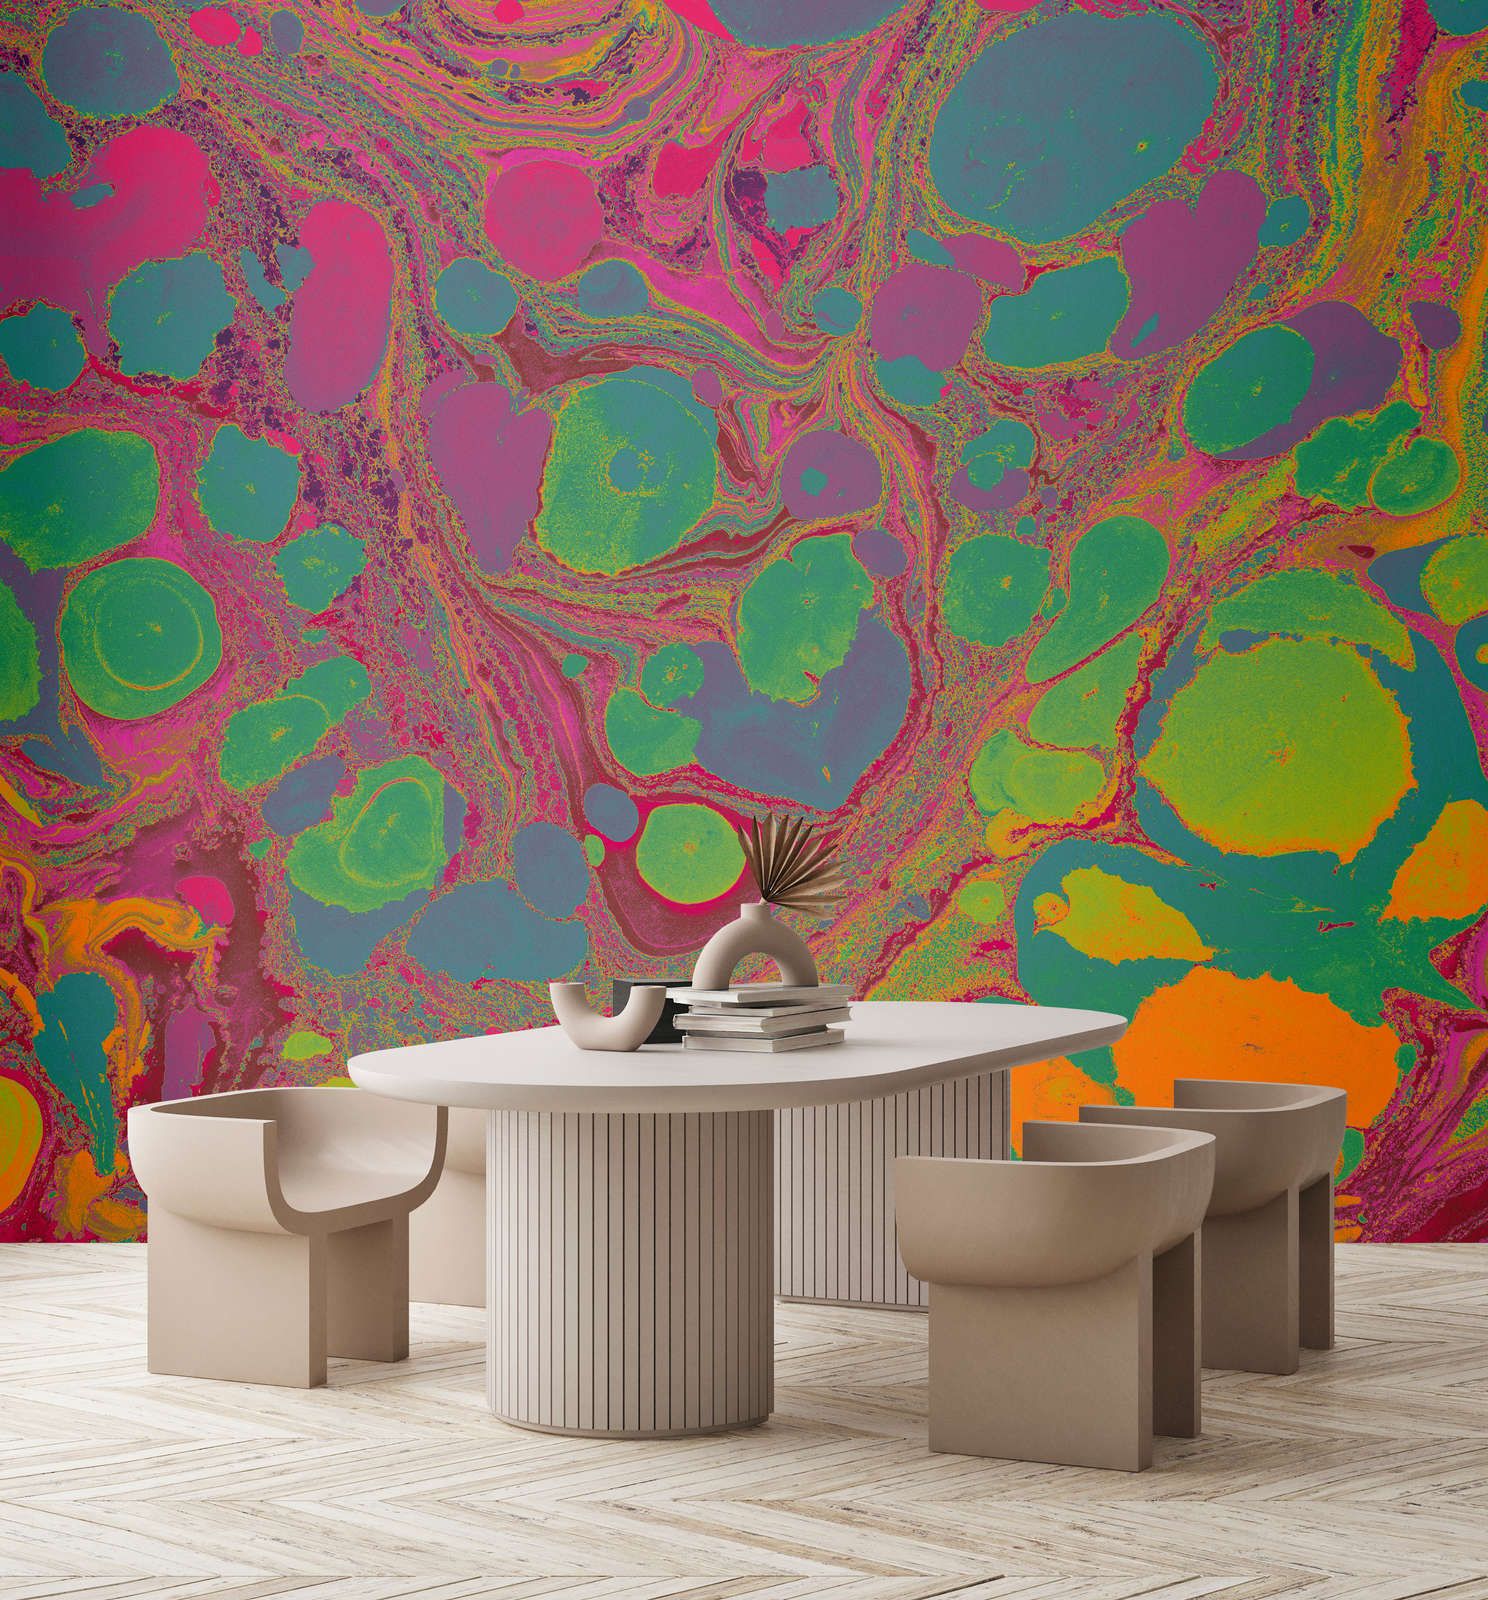             Photo wallpaper »flow« - Colour splash in bright colours - green, pink, orange | matt, smooth non-woven
        